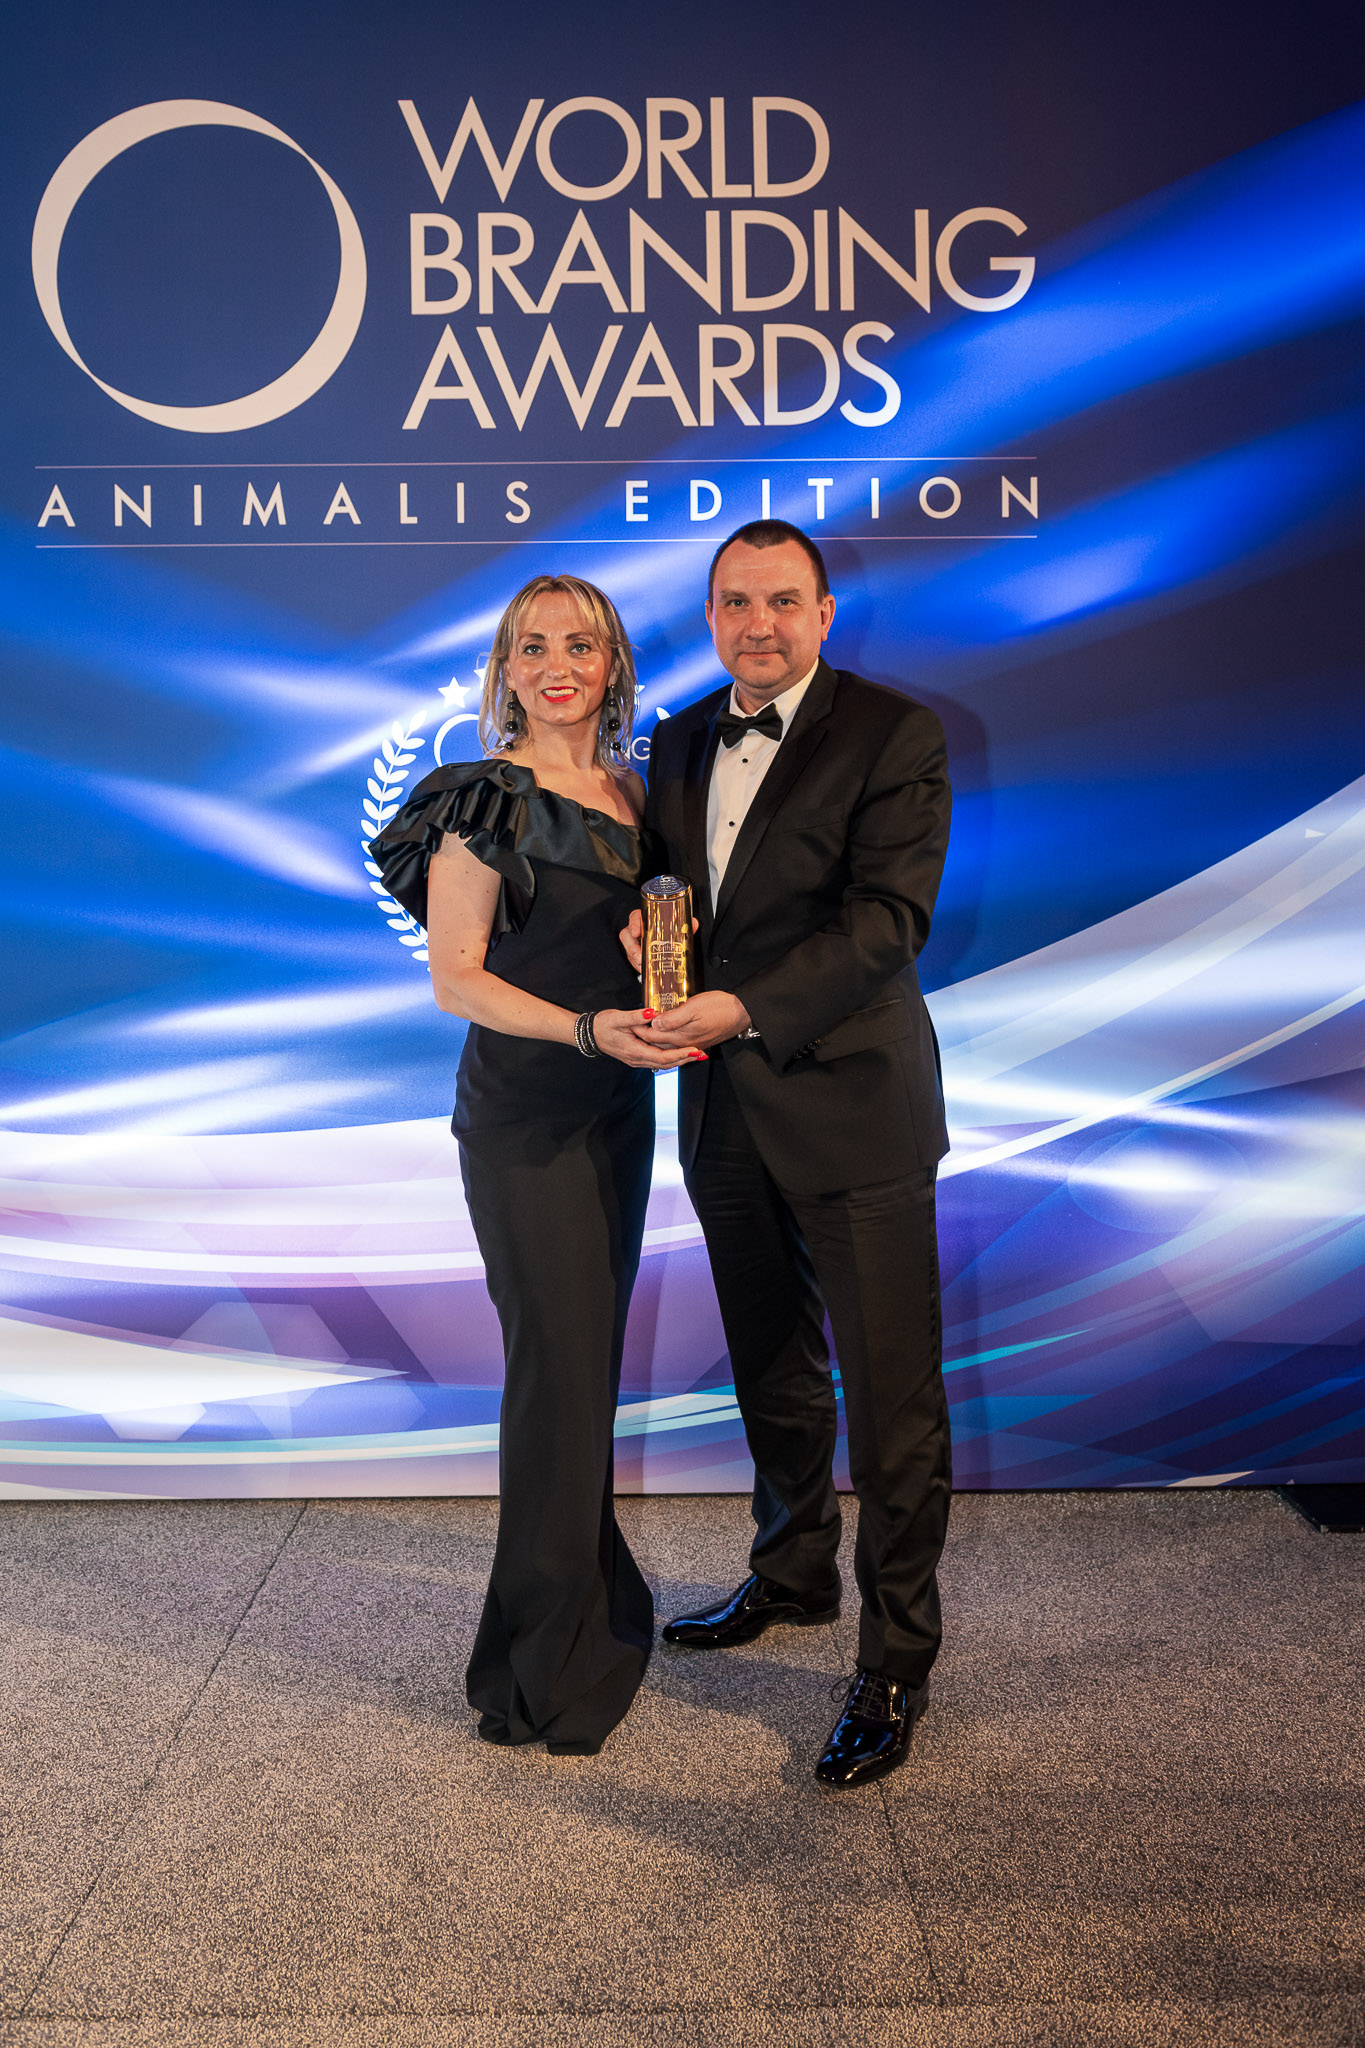 20190703_224630_world_branding_awards_animalis_7998